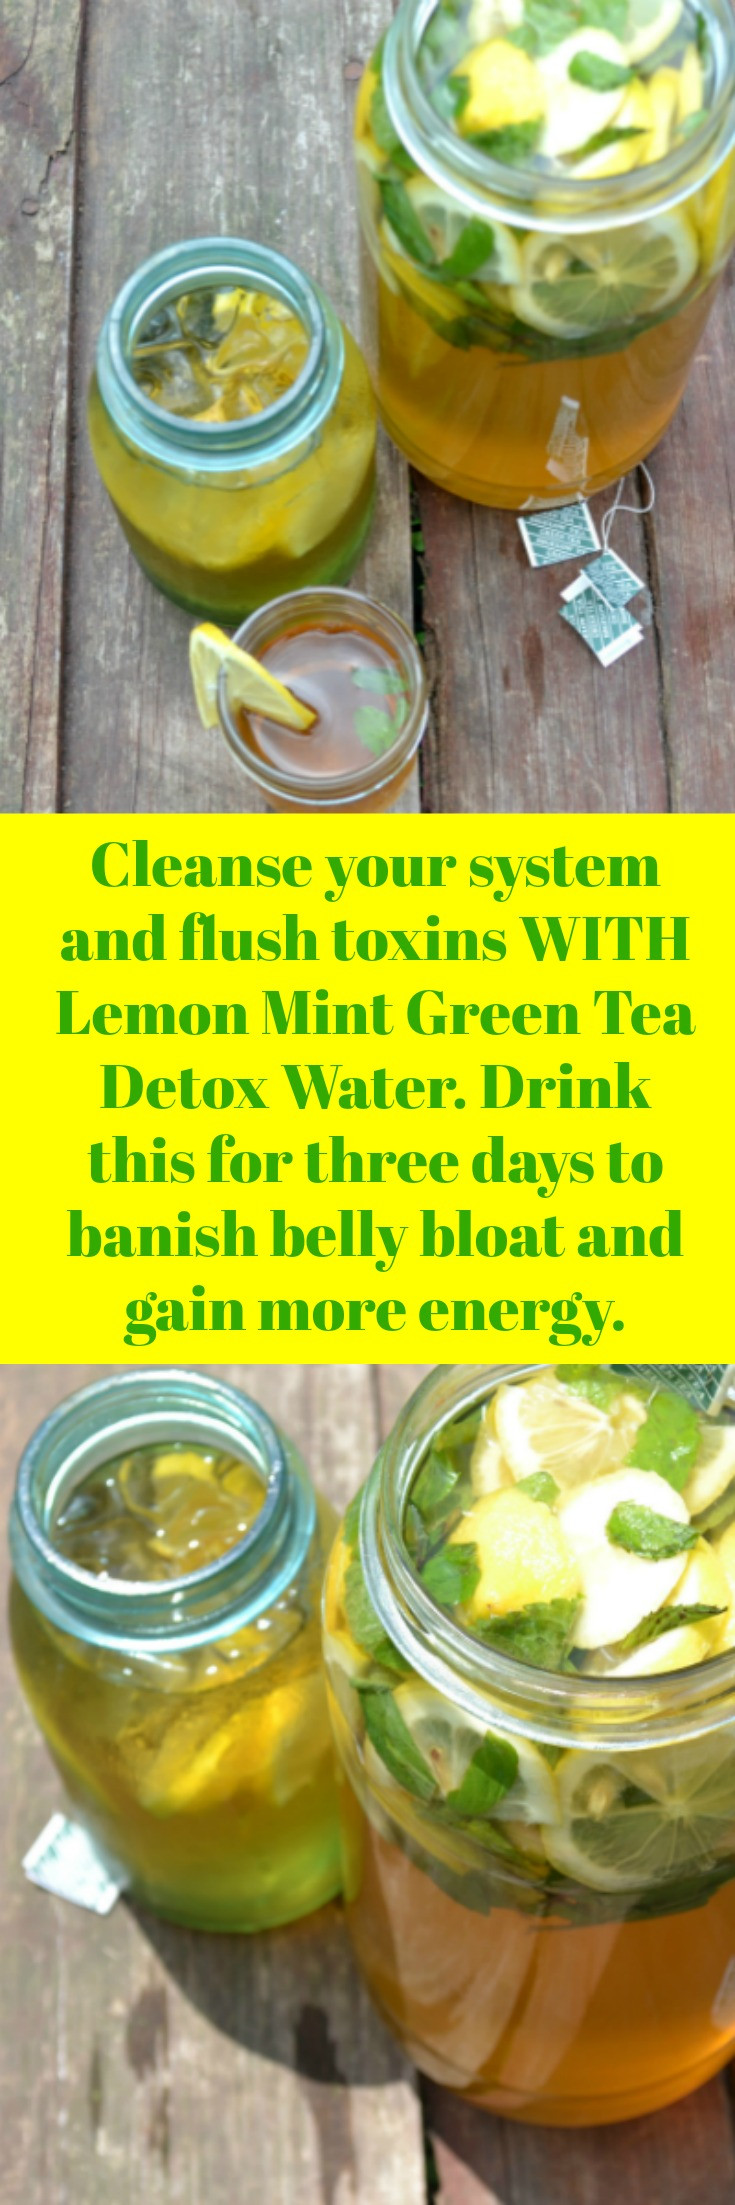 Green Tea Weight Loss Drink Detox Waters
 Green Tea Lemon Mint Detox Water for Cleansing